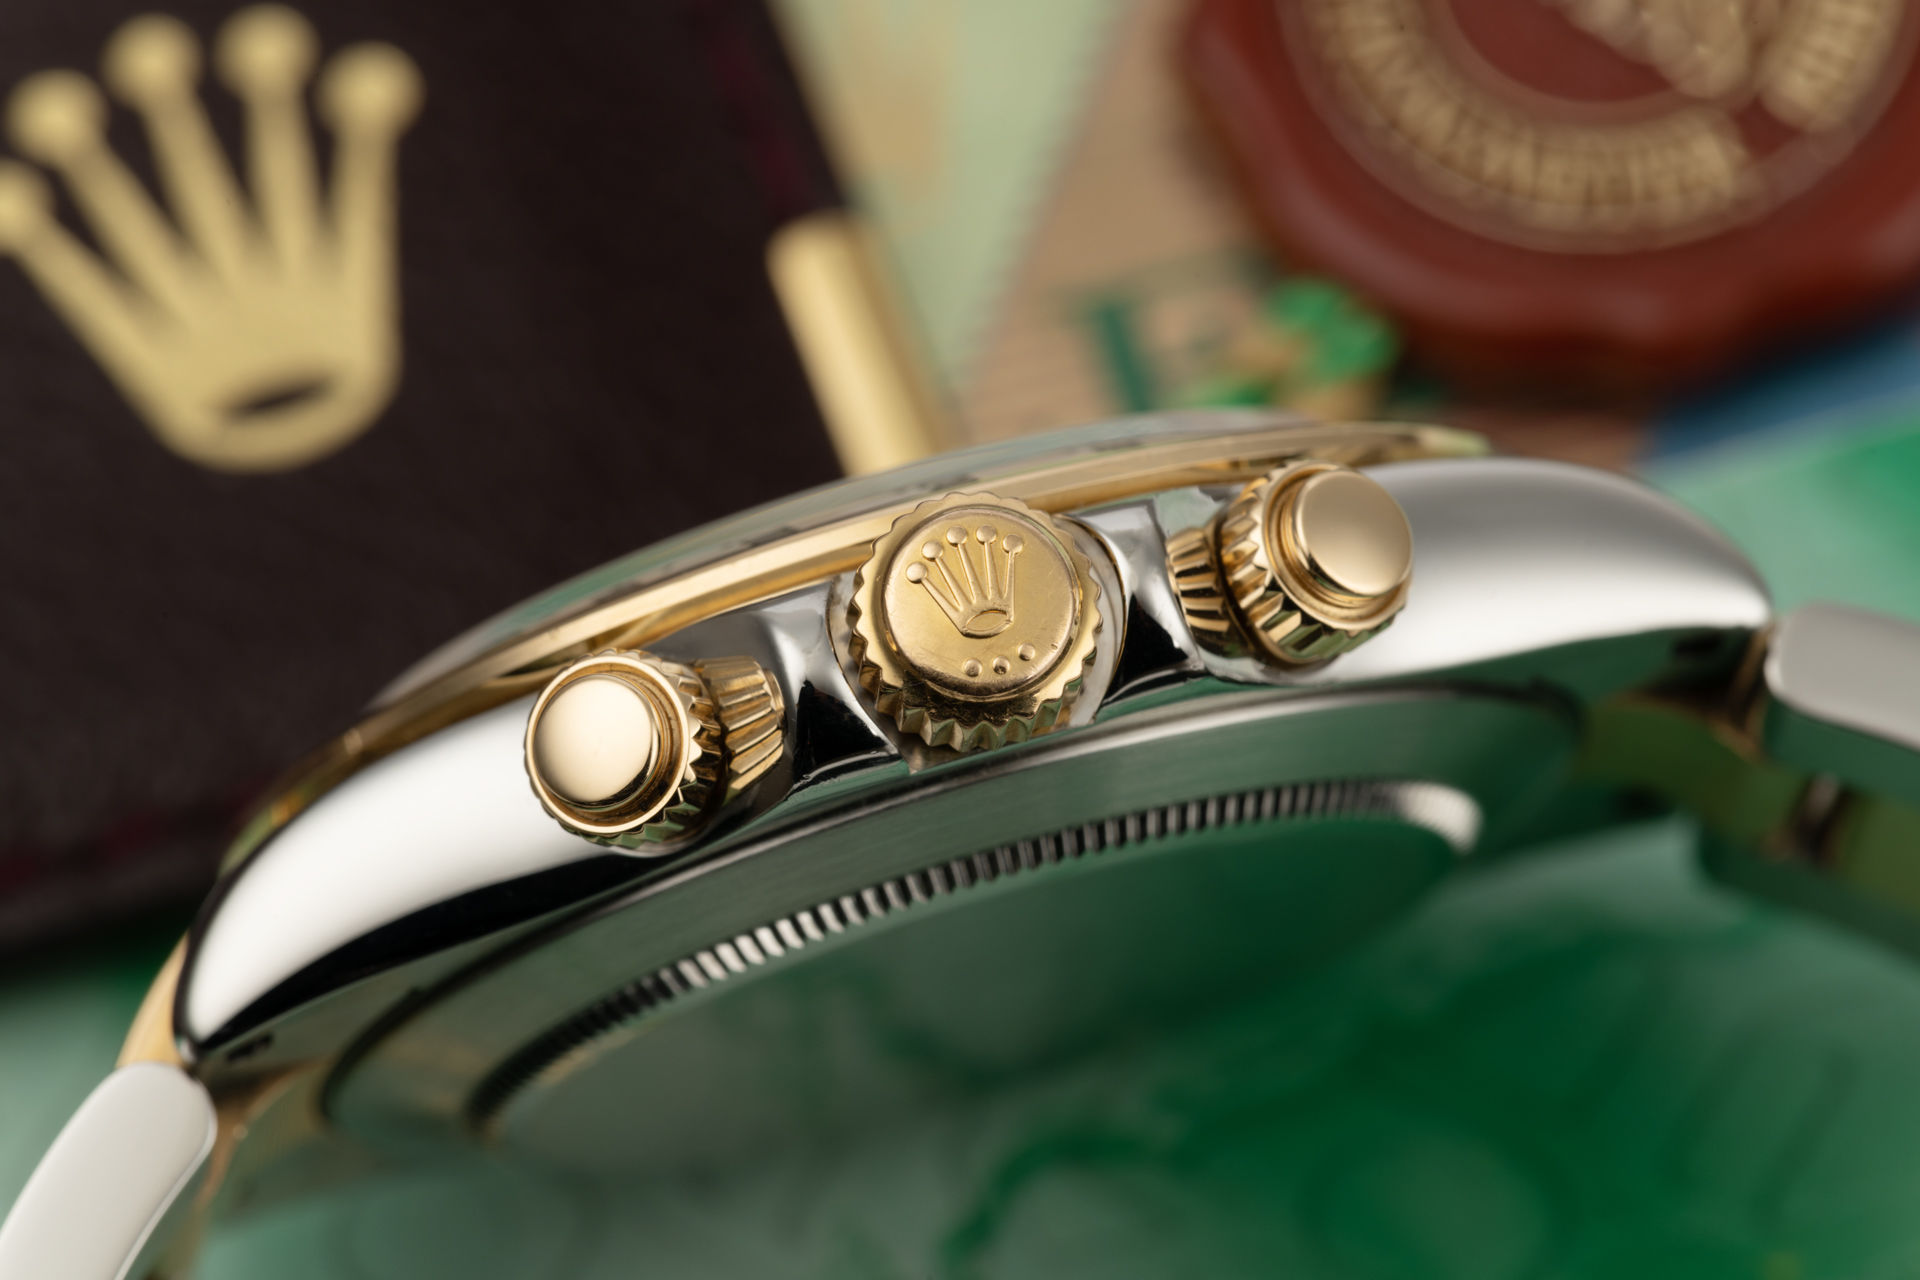 Gold & Steel "Rare Cream Dial" | ref 116523 | Rolex Cosmograph Daytona